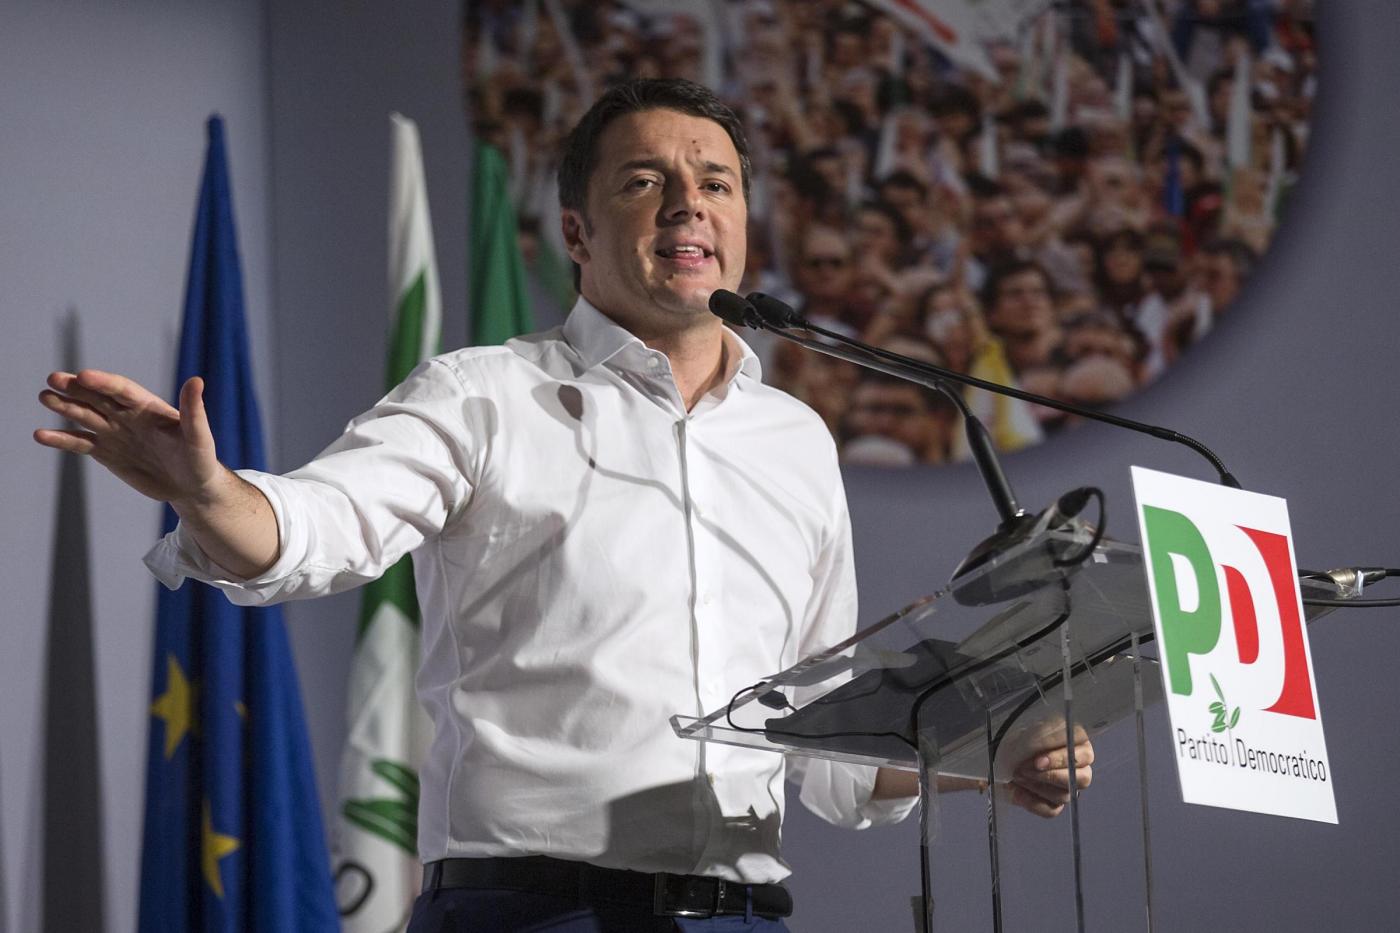 Assemblea Pd, Renzi parla alla minoranza e chiede lealtà ai dissidenti